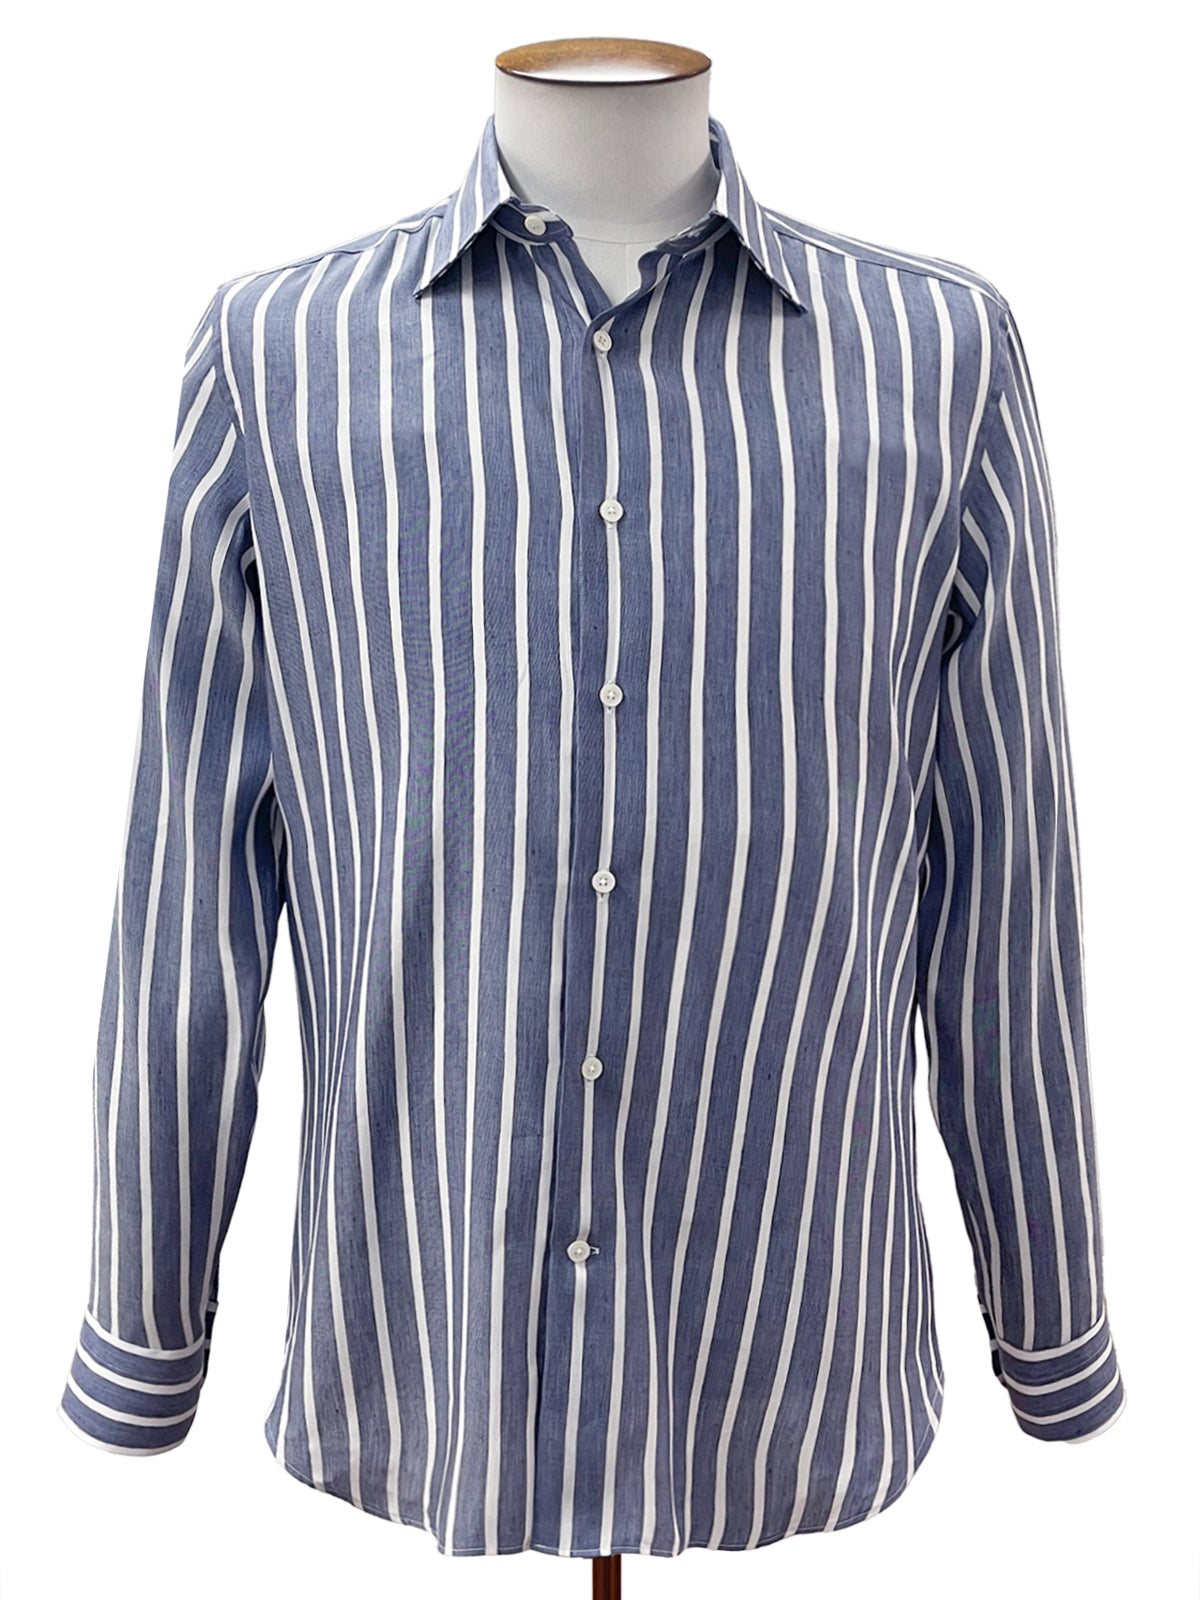 Indigo & White Bengal Stripe Linen Shirt